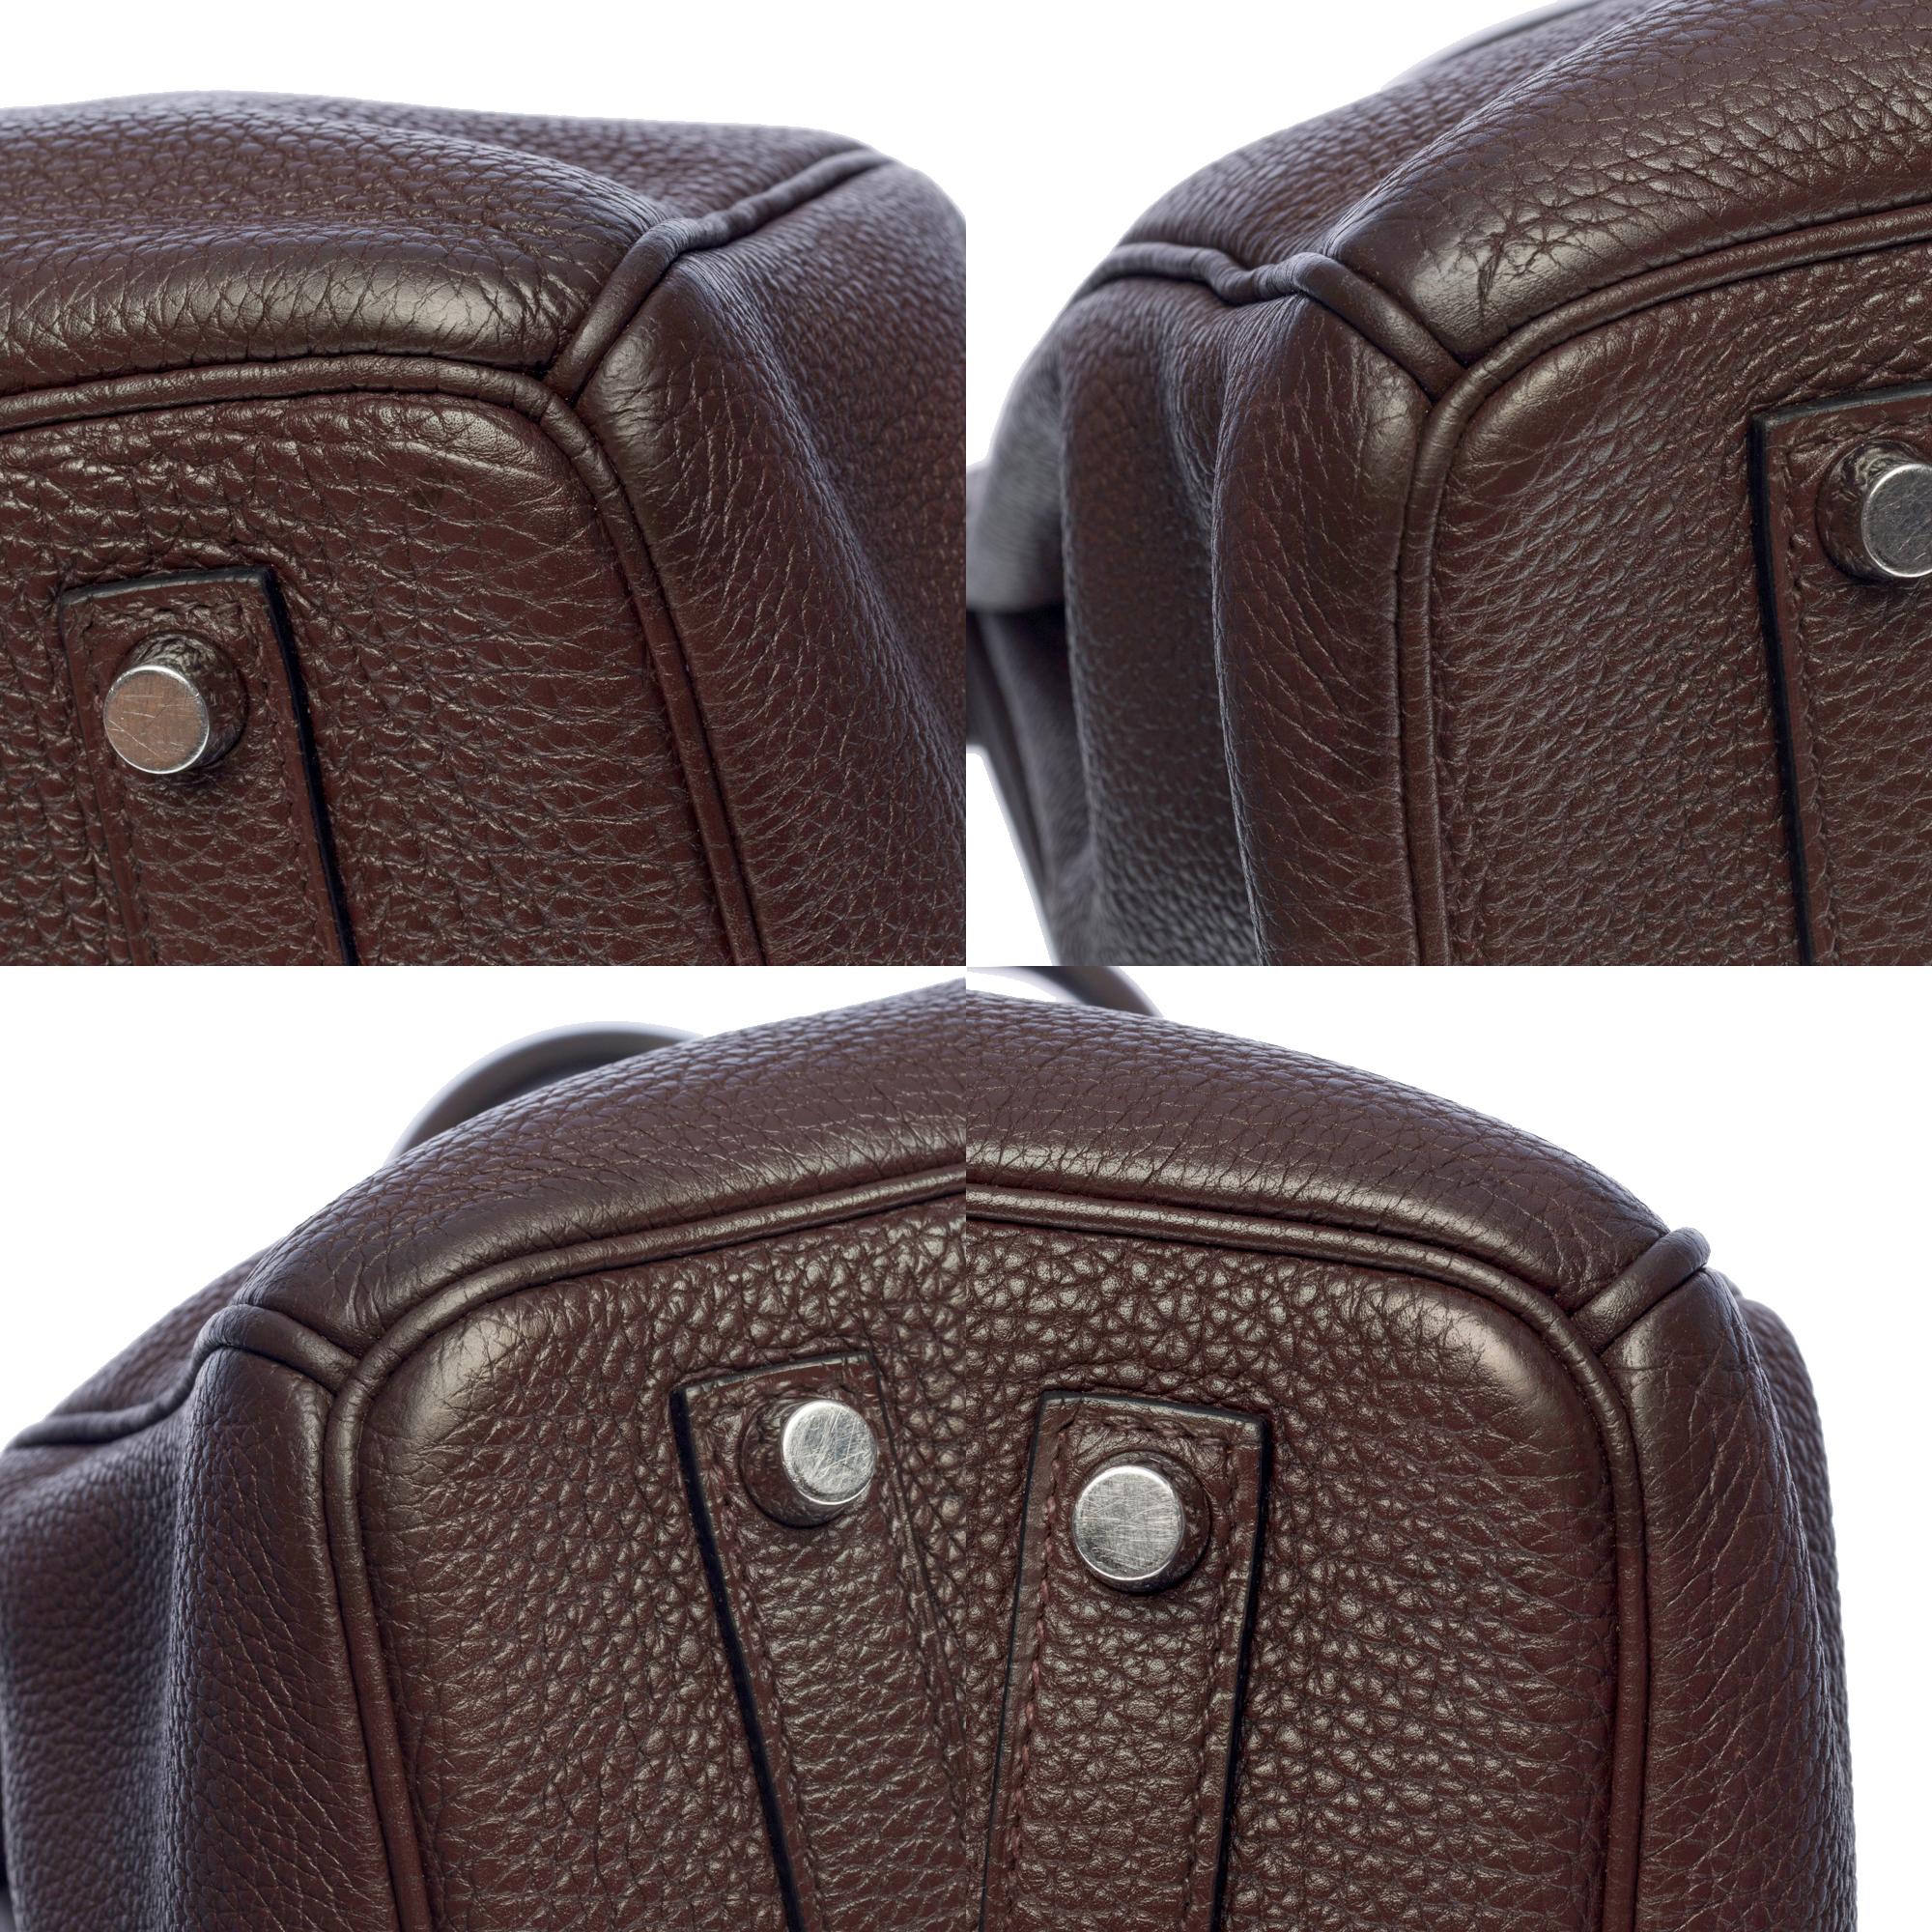 Splendid Hermès Birkin 35 handbag in brown Taurillon Clémence leather, SHW 5